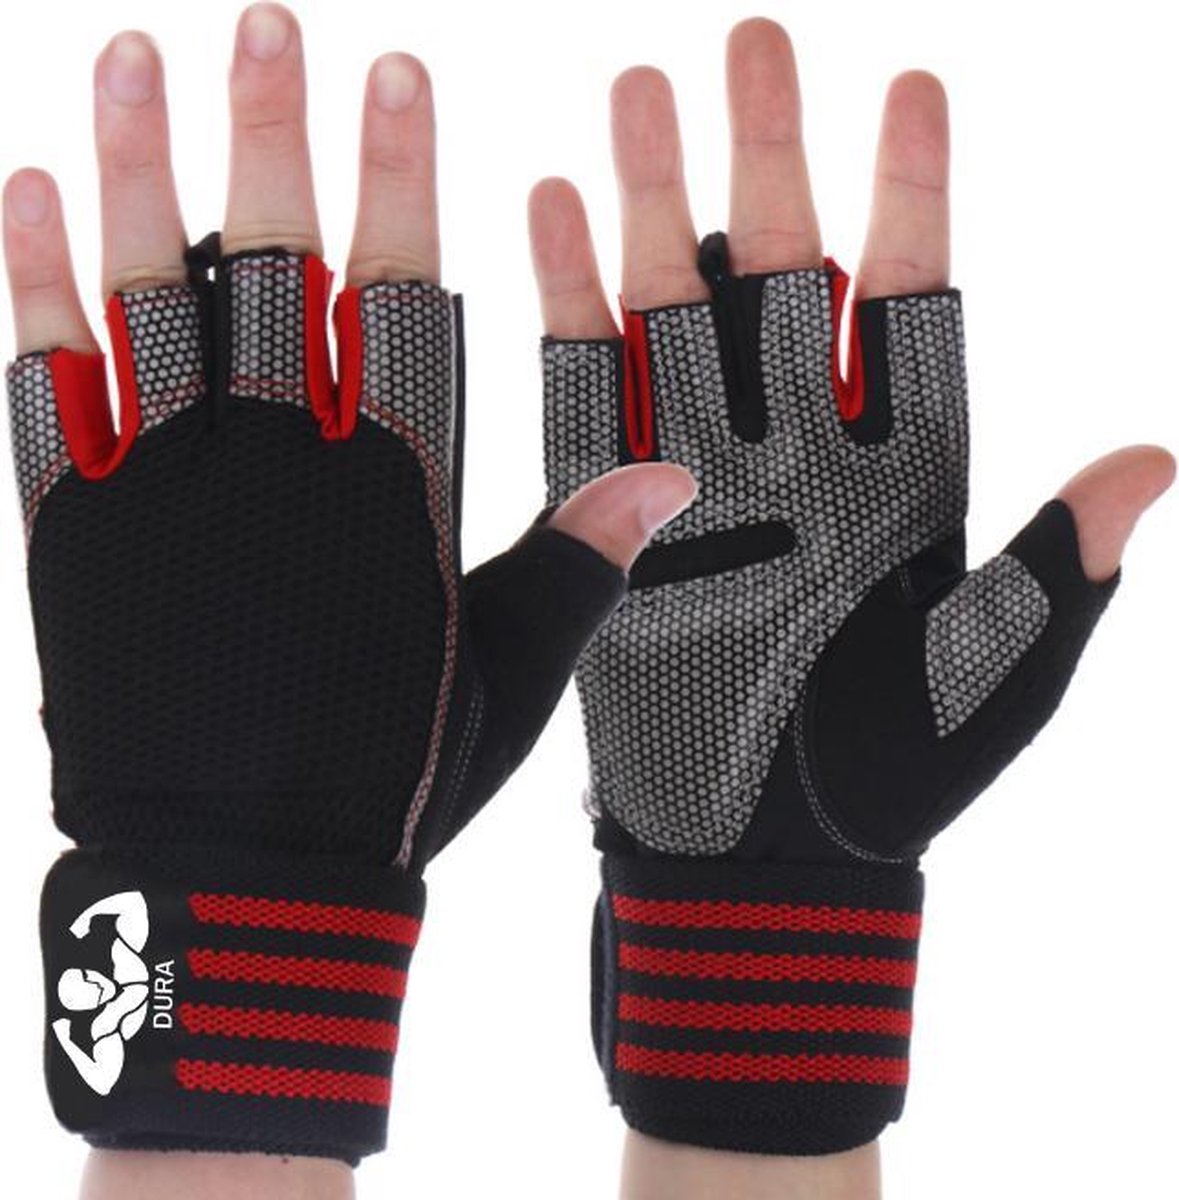 DURA Premium Fitness Gloves - Fitness handschoenen - Gewichthefhandschoenen - Sporthandschoenen - Fit Sport - Rood - M